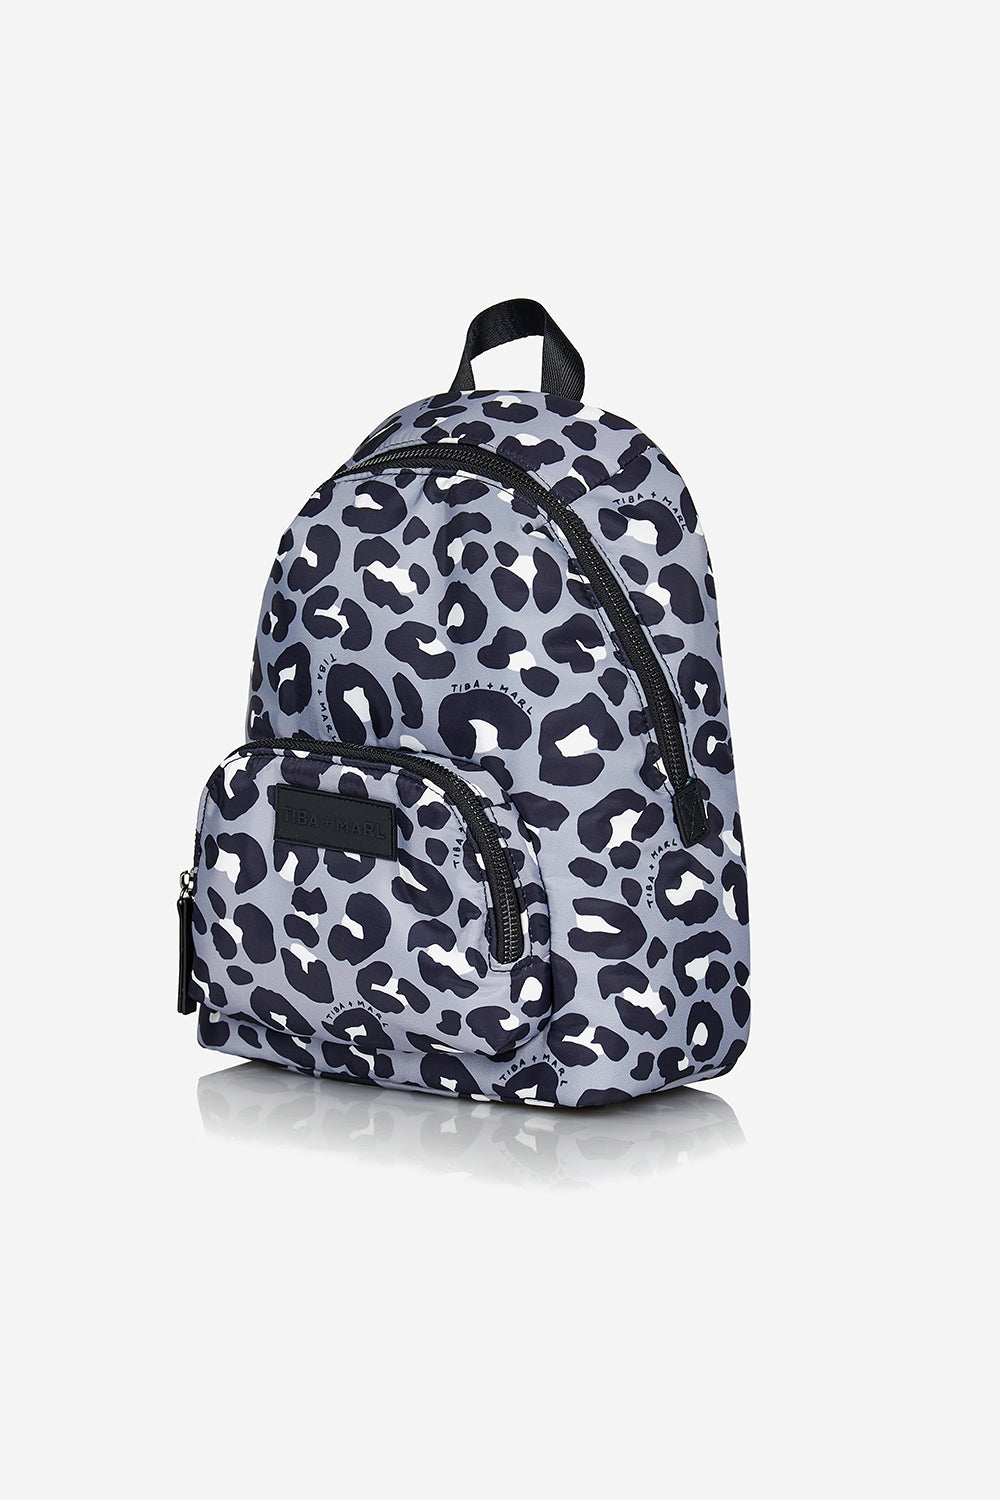 Tiba + Marl Mini Elwood Kids Backpack | Grey / Black Leopard